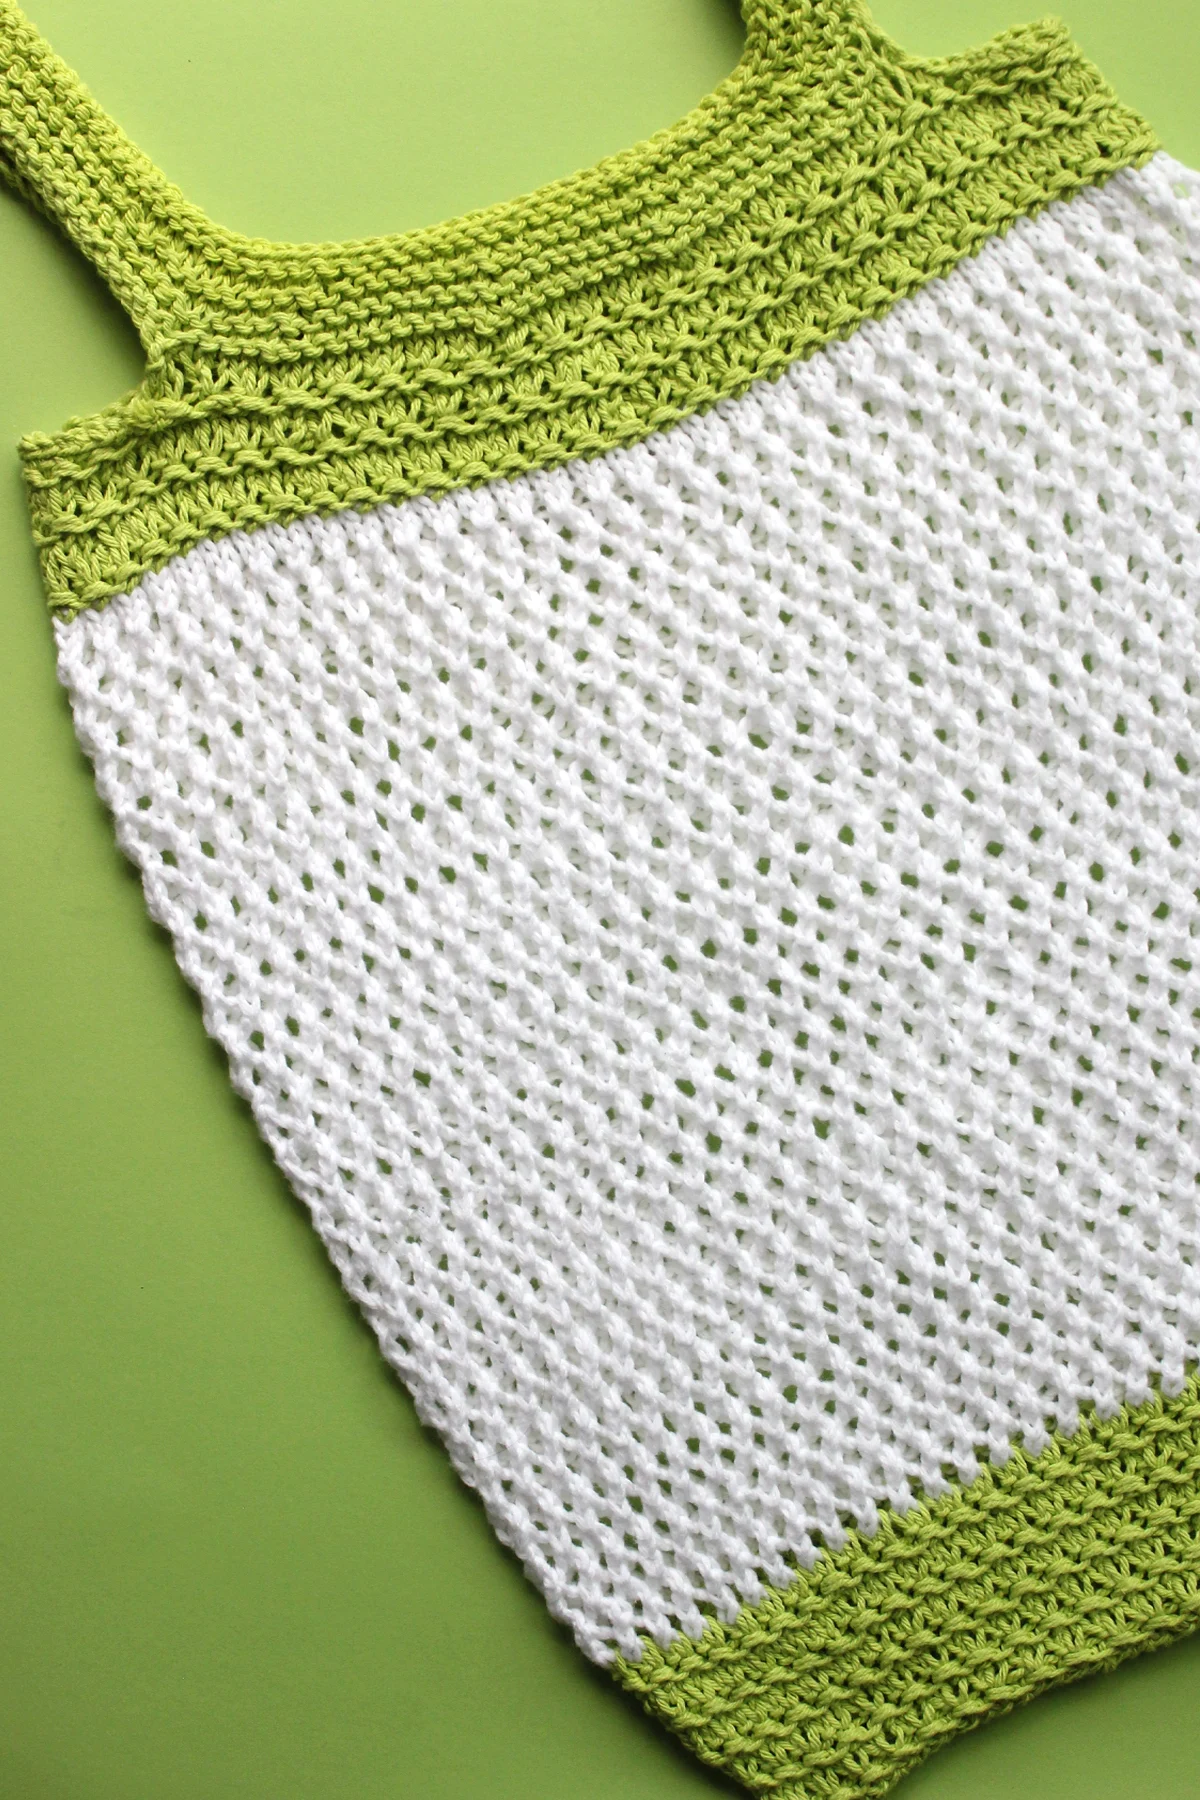 Knitting Patterns & Supplies - Barrington Tote Bag Knit Pattern